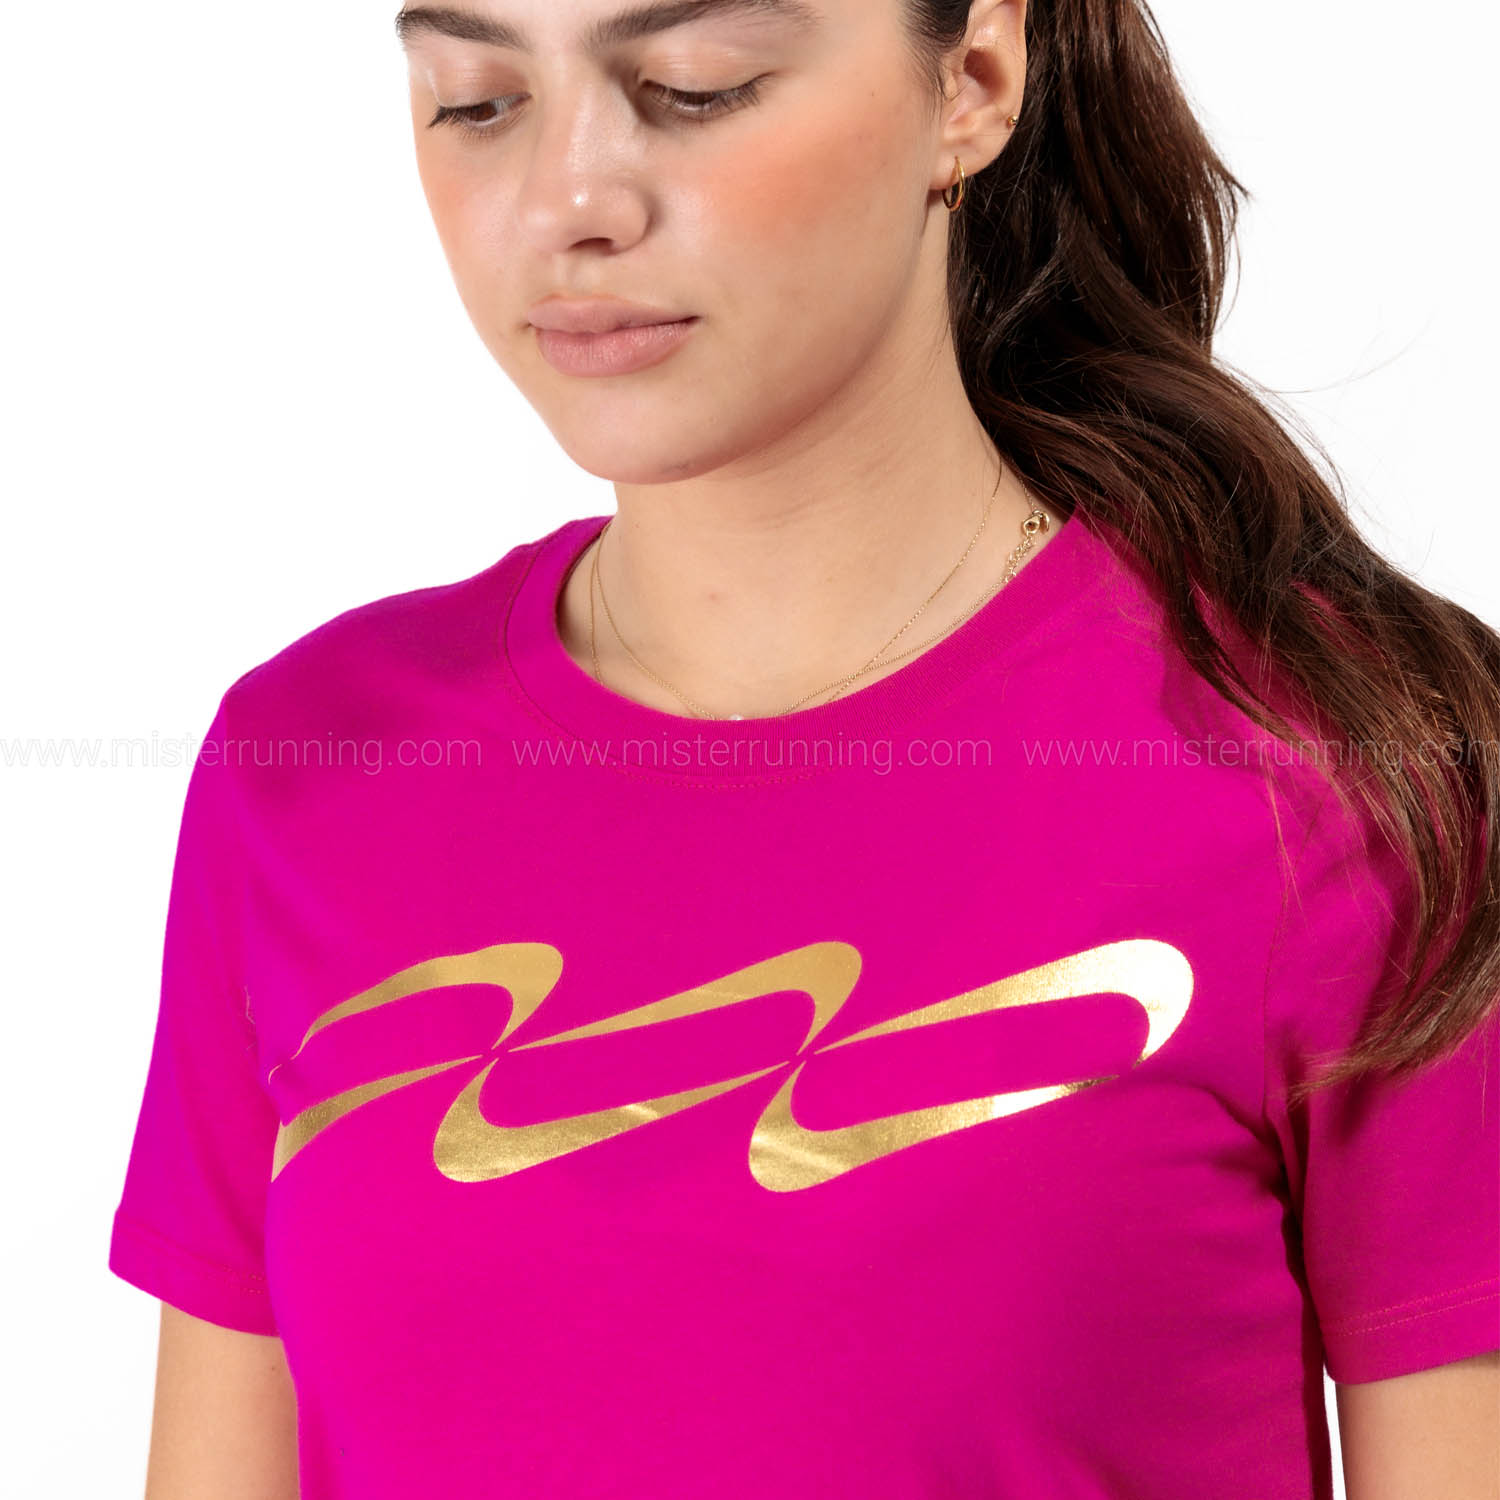 Nike Dri-FIT Crew T-Shirt - Fireberry